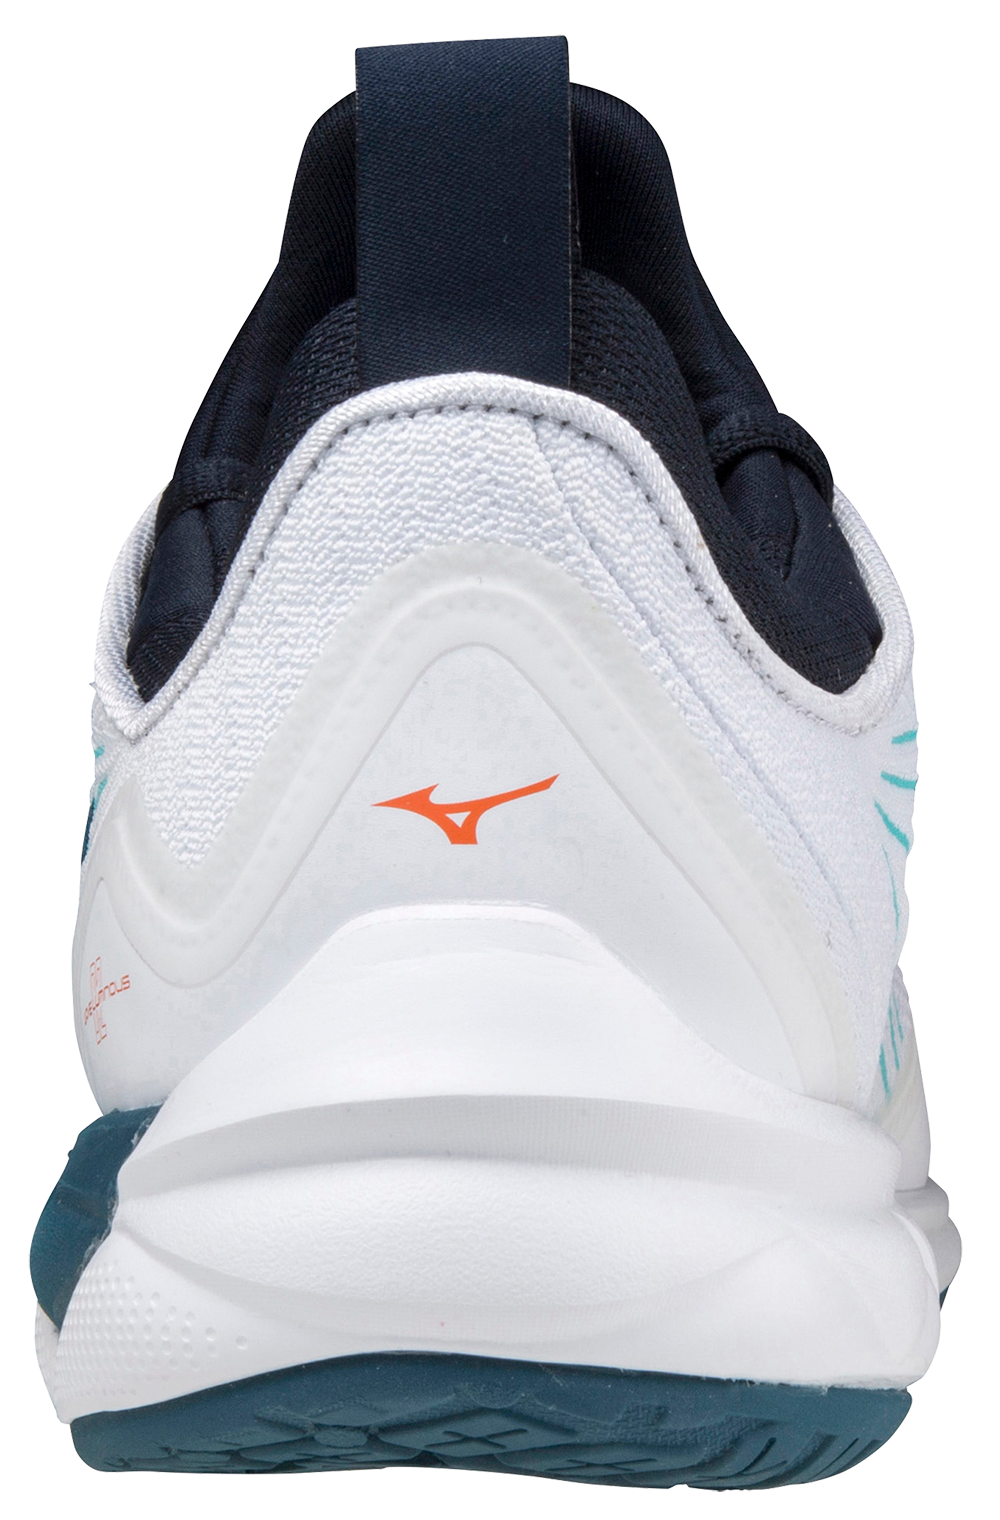 Mizuno Wave Luminous 2 (White) Squash Shoes